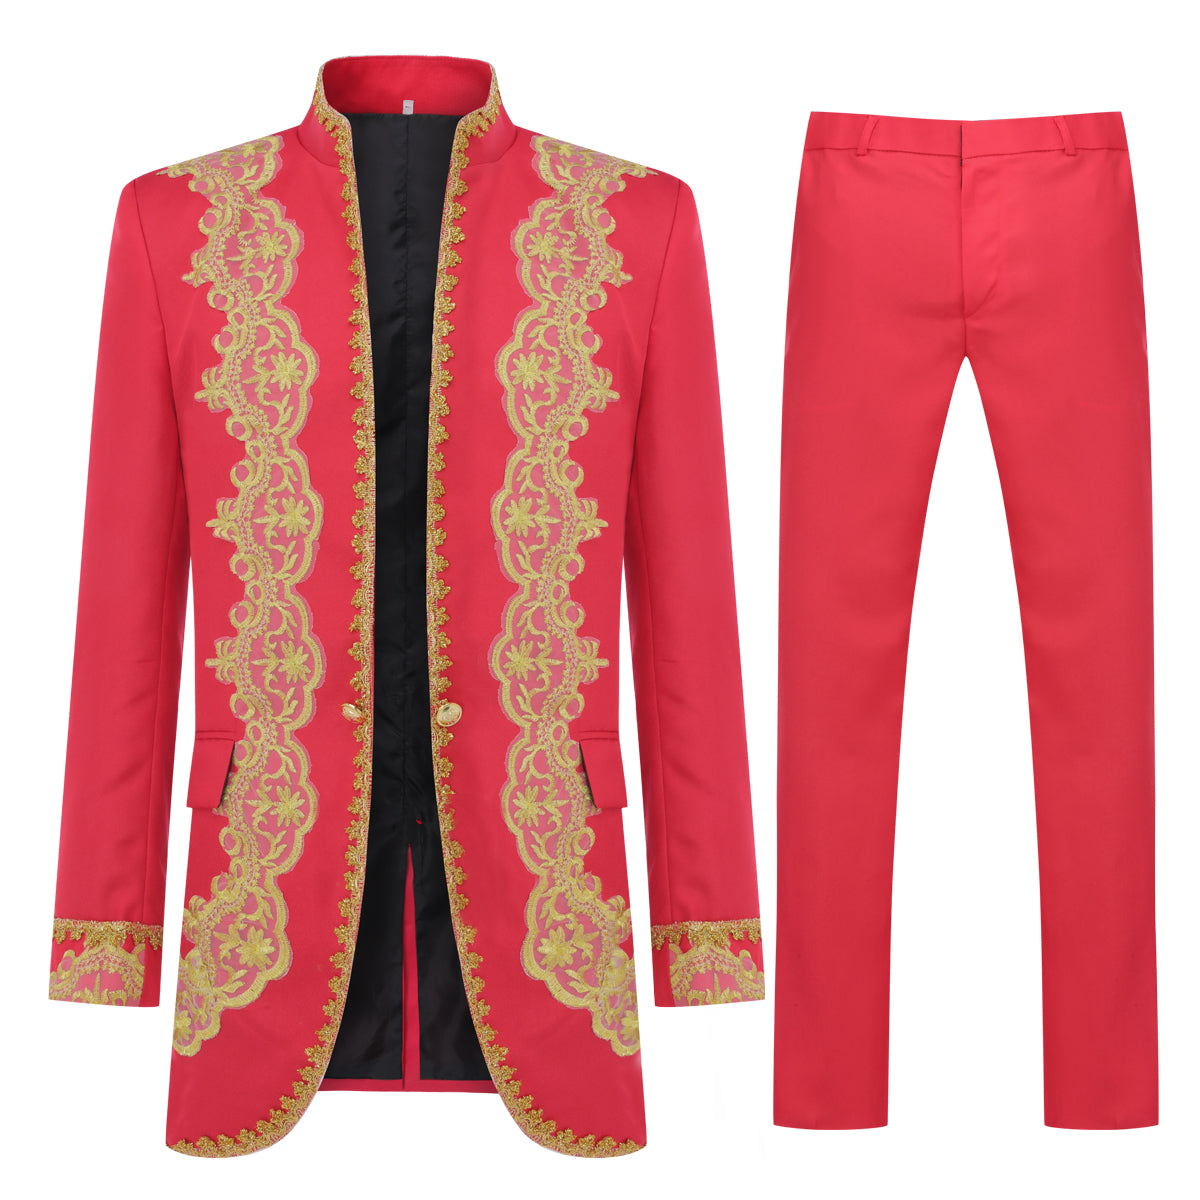 Slim Fit Men's Royal Style Men's Fashion Suits Tuxedo Wedding Red